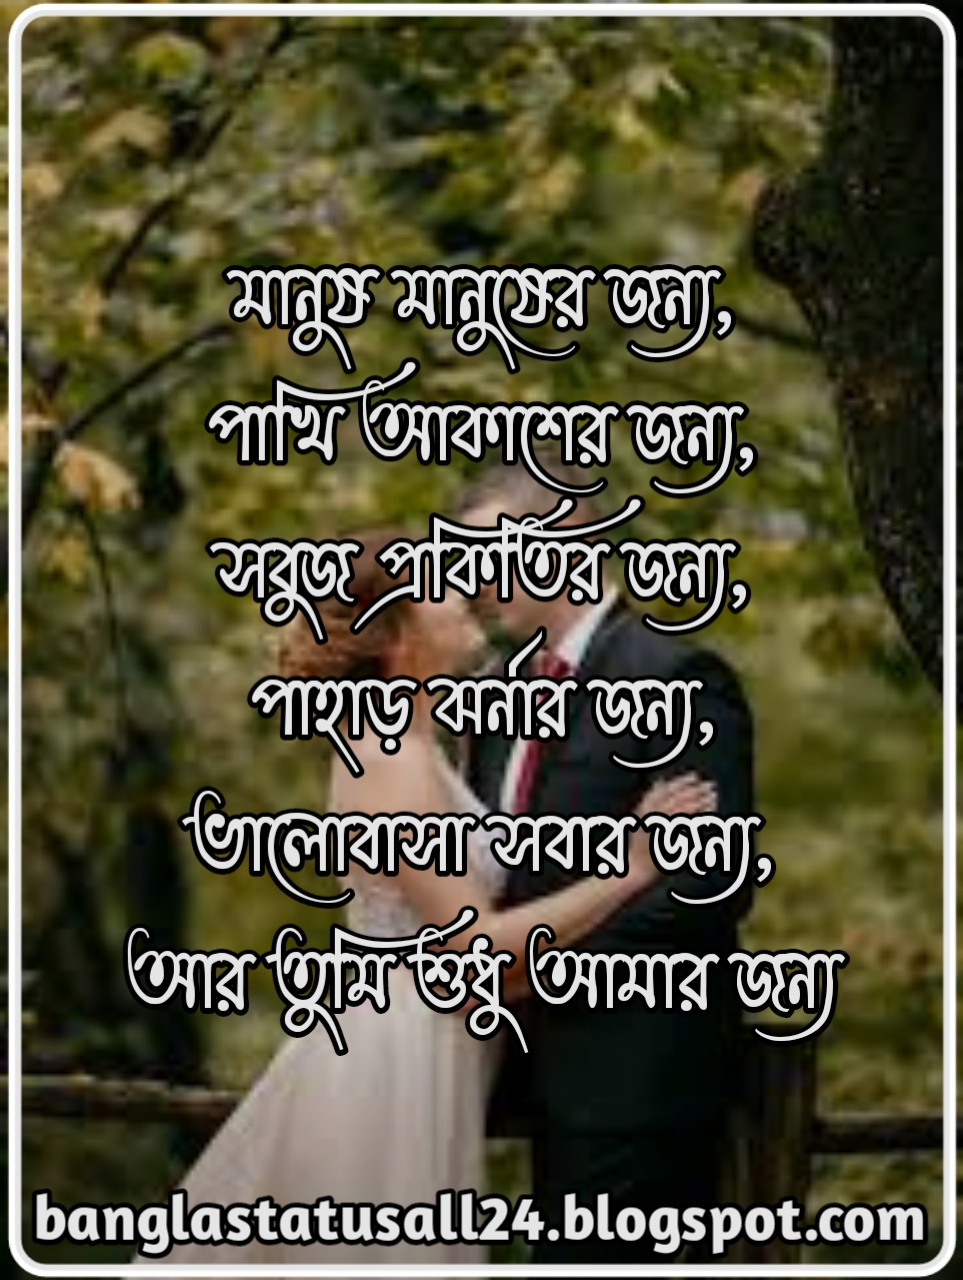 Bangla Love Sms, Bangla quotes Pic, Love status bangla, Love caption, Facebook caption bangla, bangla chondo pic, ছন্দ লেখা পিক, প্রেমের ছন্দ, Bangla Status Picture